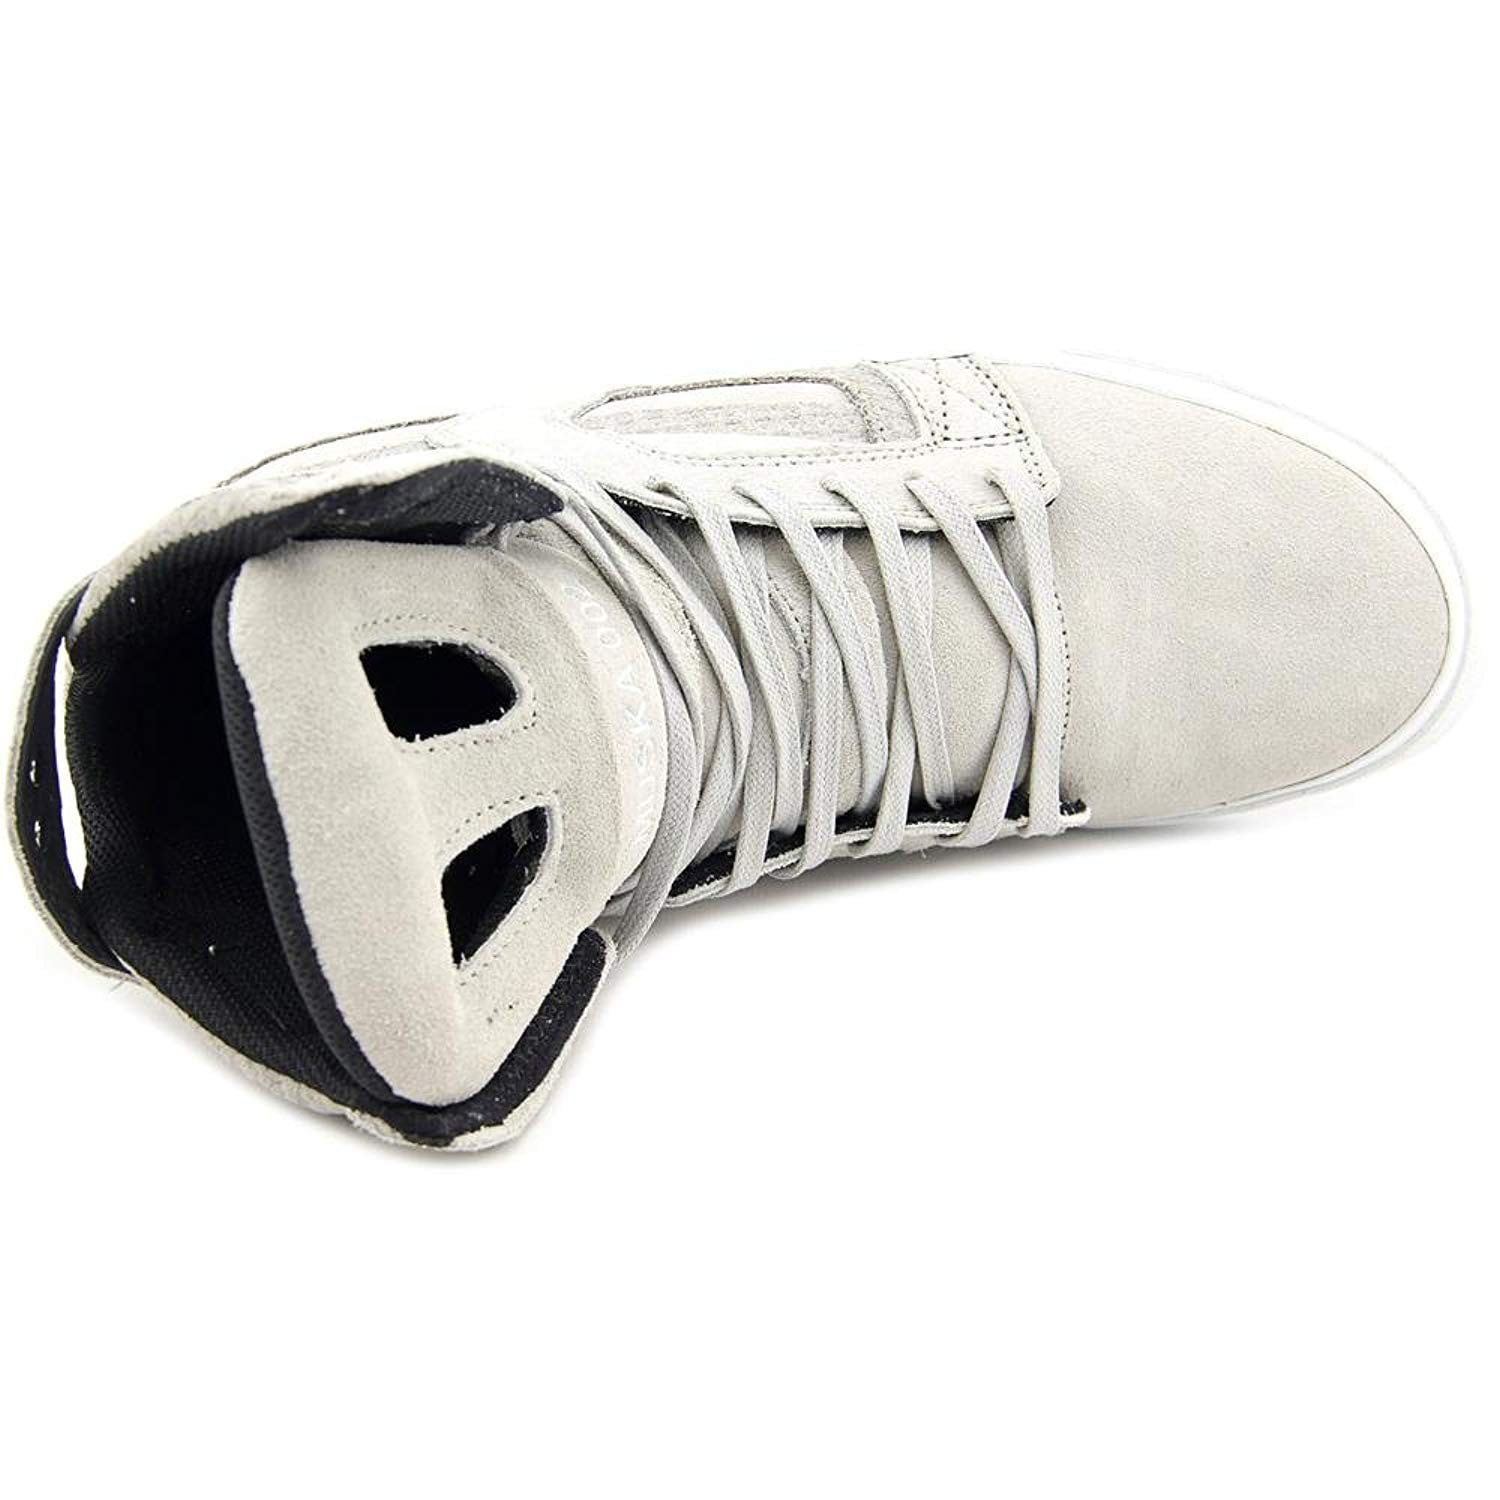 SUPRA shoes Skytop 2, Men's size 10.5